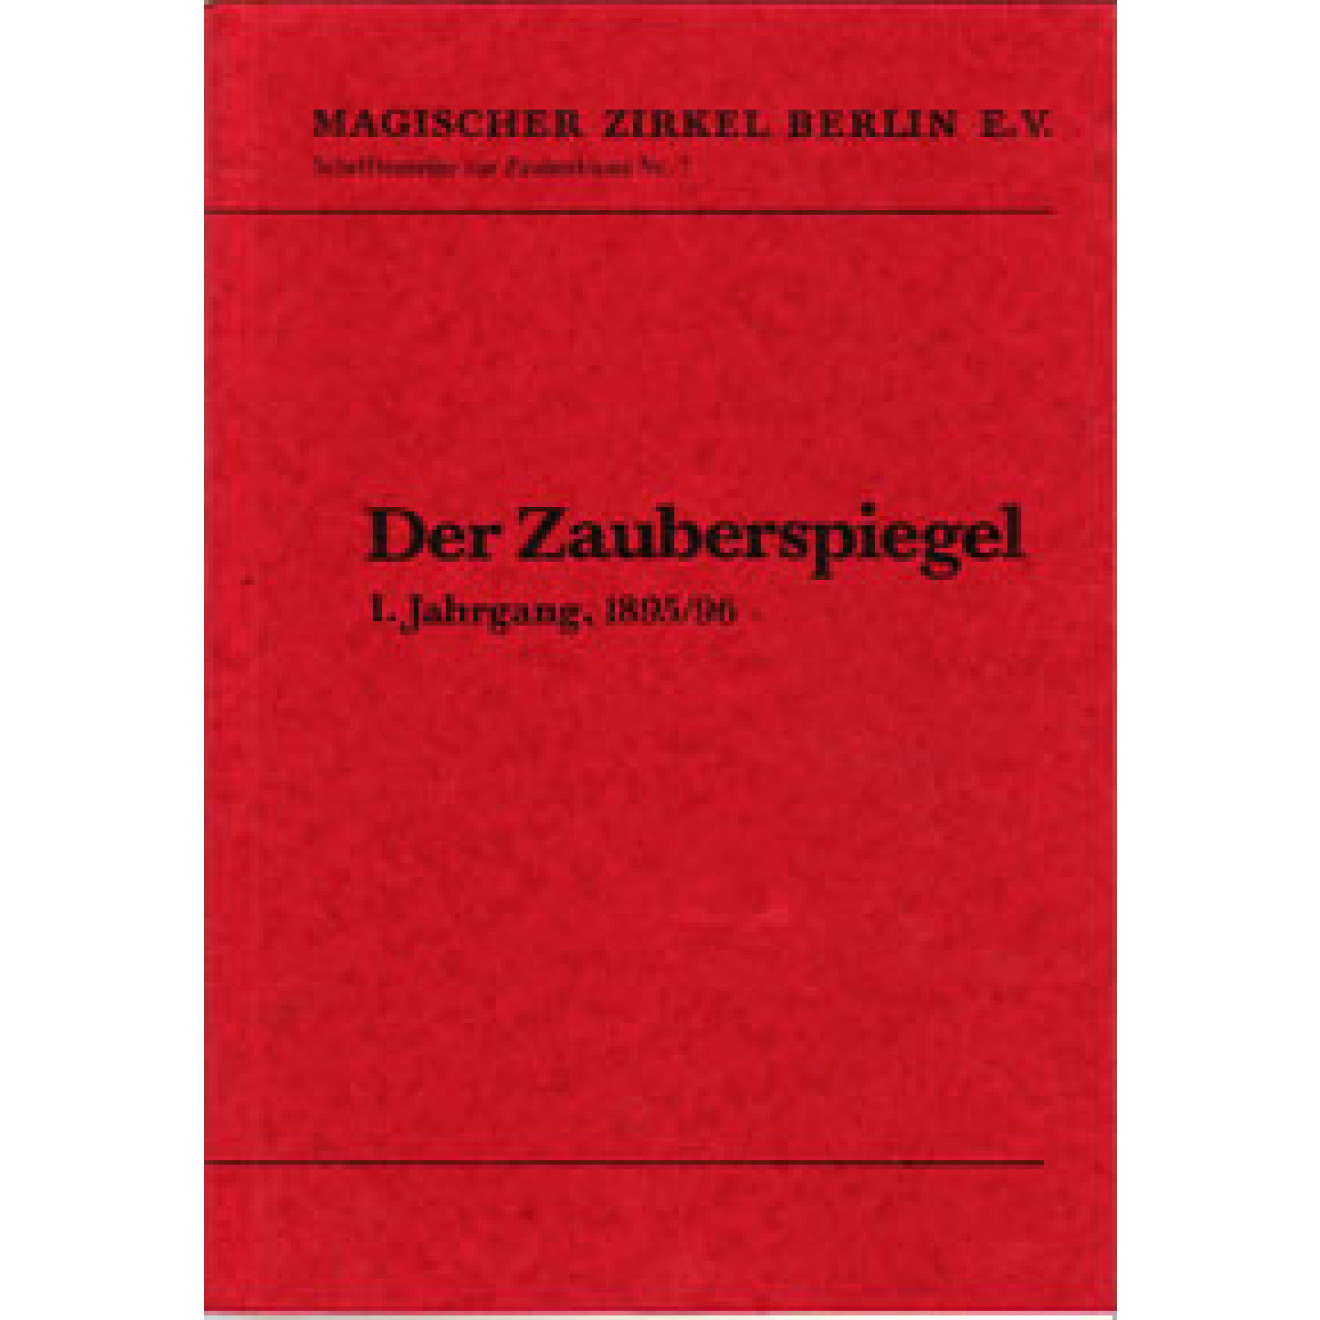 Der Zauberspiegel, I. Jahrgang, 1895/96 (Reprint)